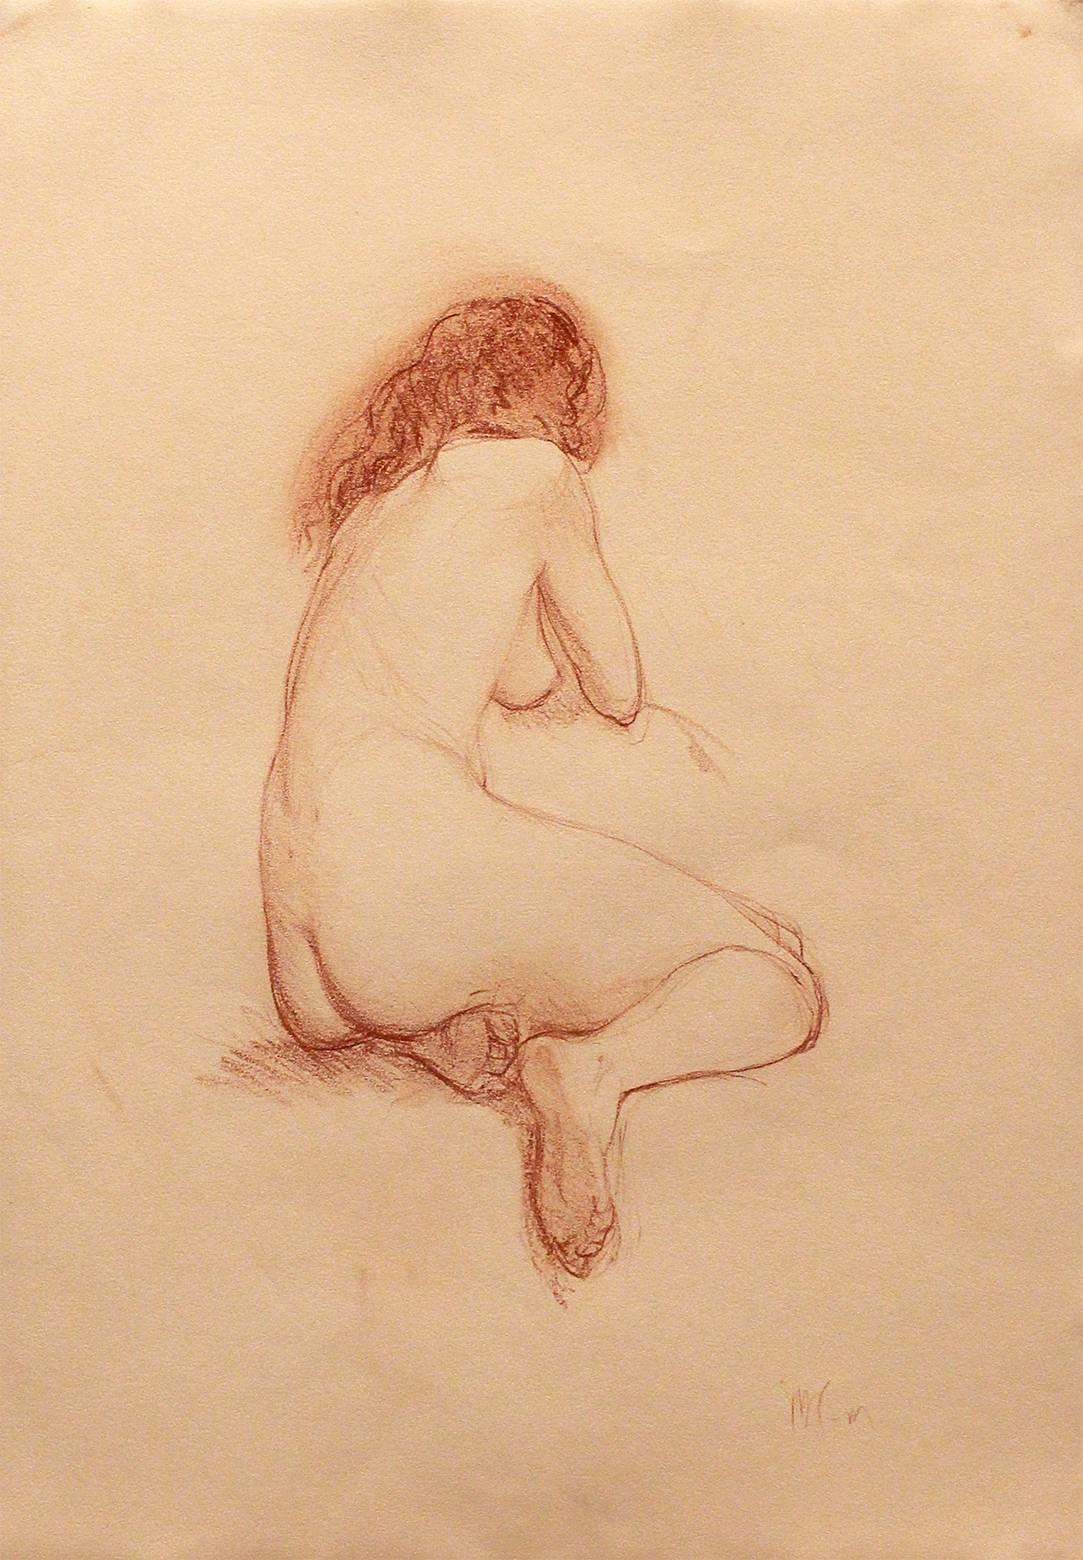 Matthew Collins Nude - Back Study